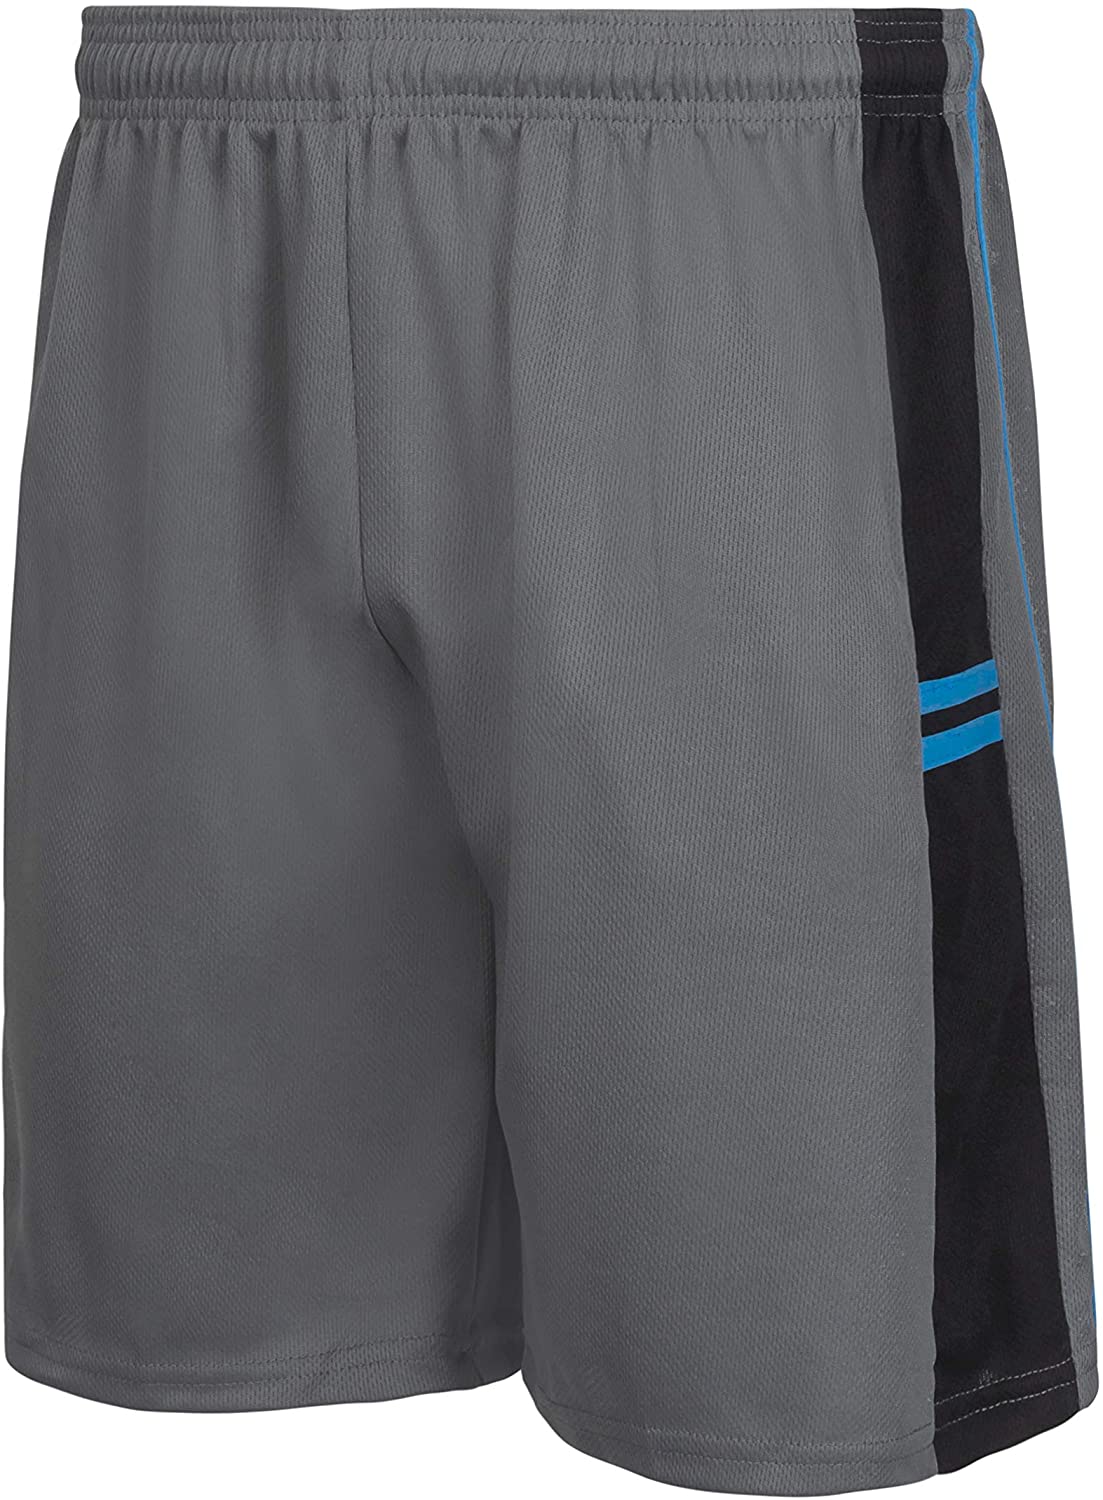 Mesh Design Activewear with Side Pockets Premium Basketball Shorts for Men